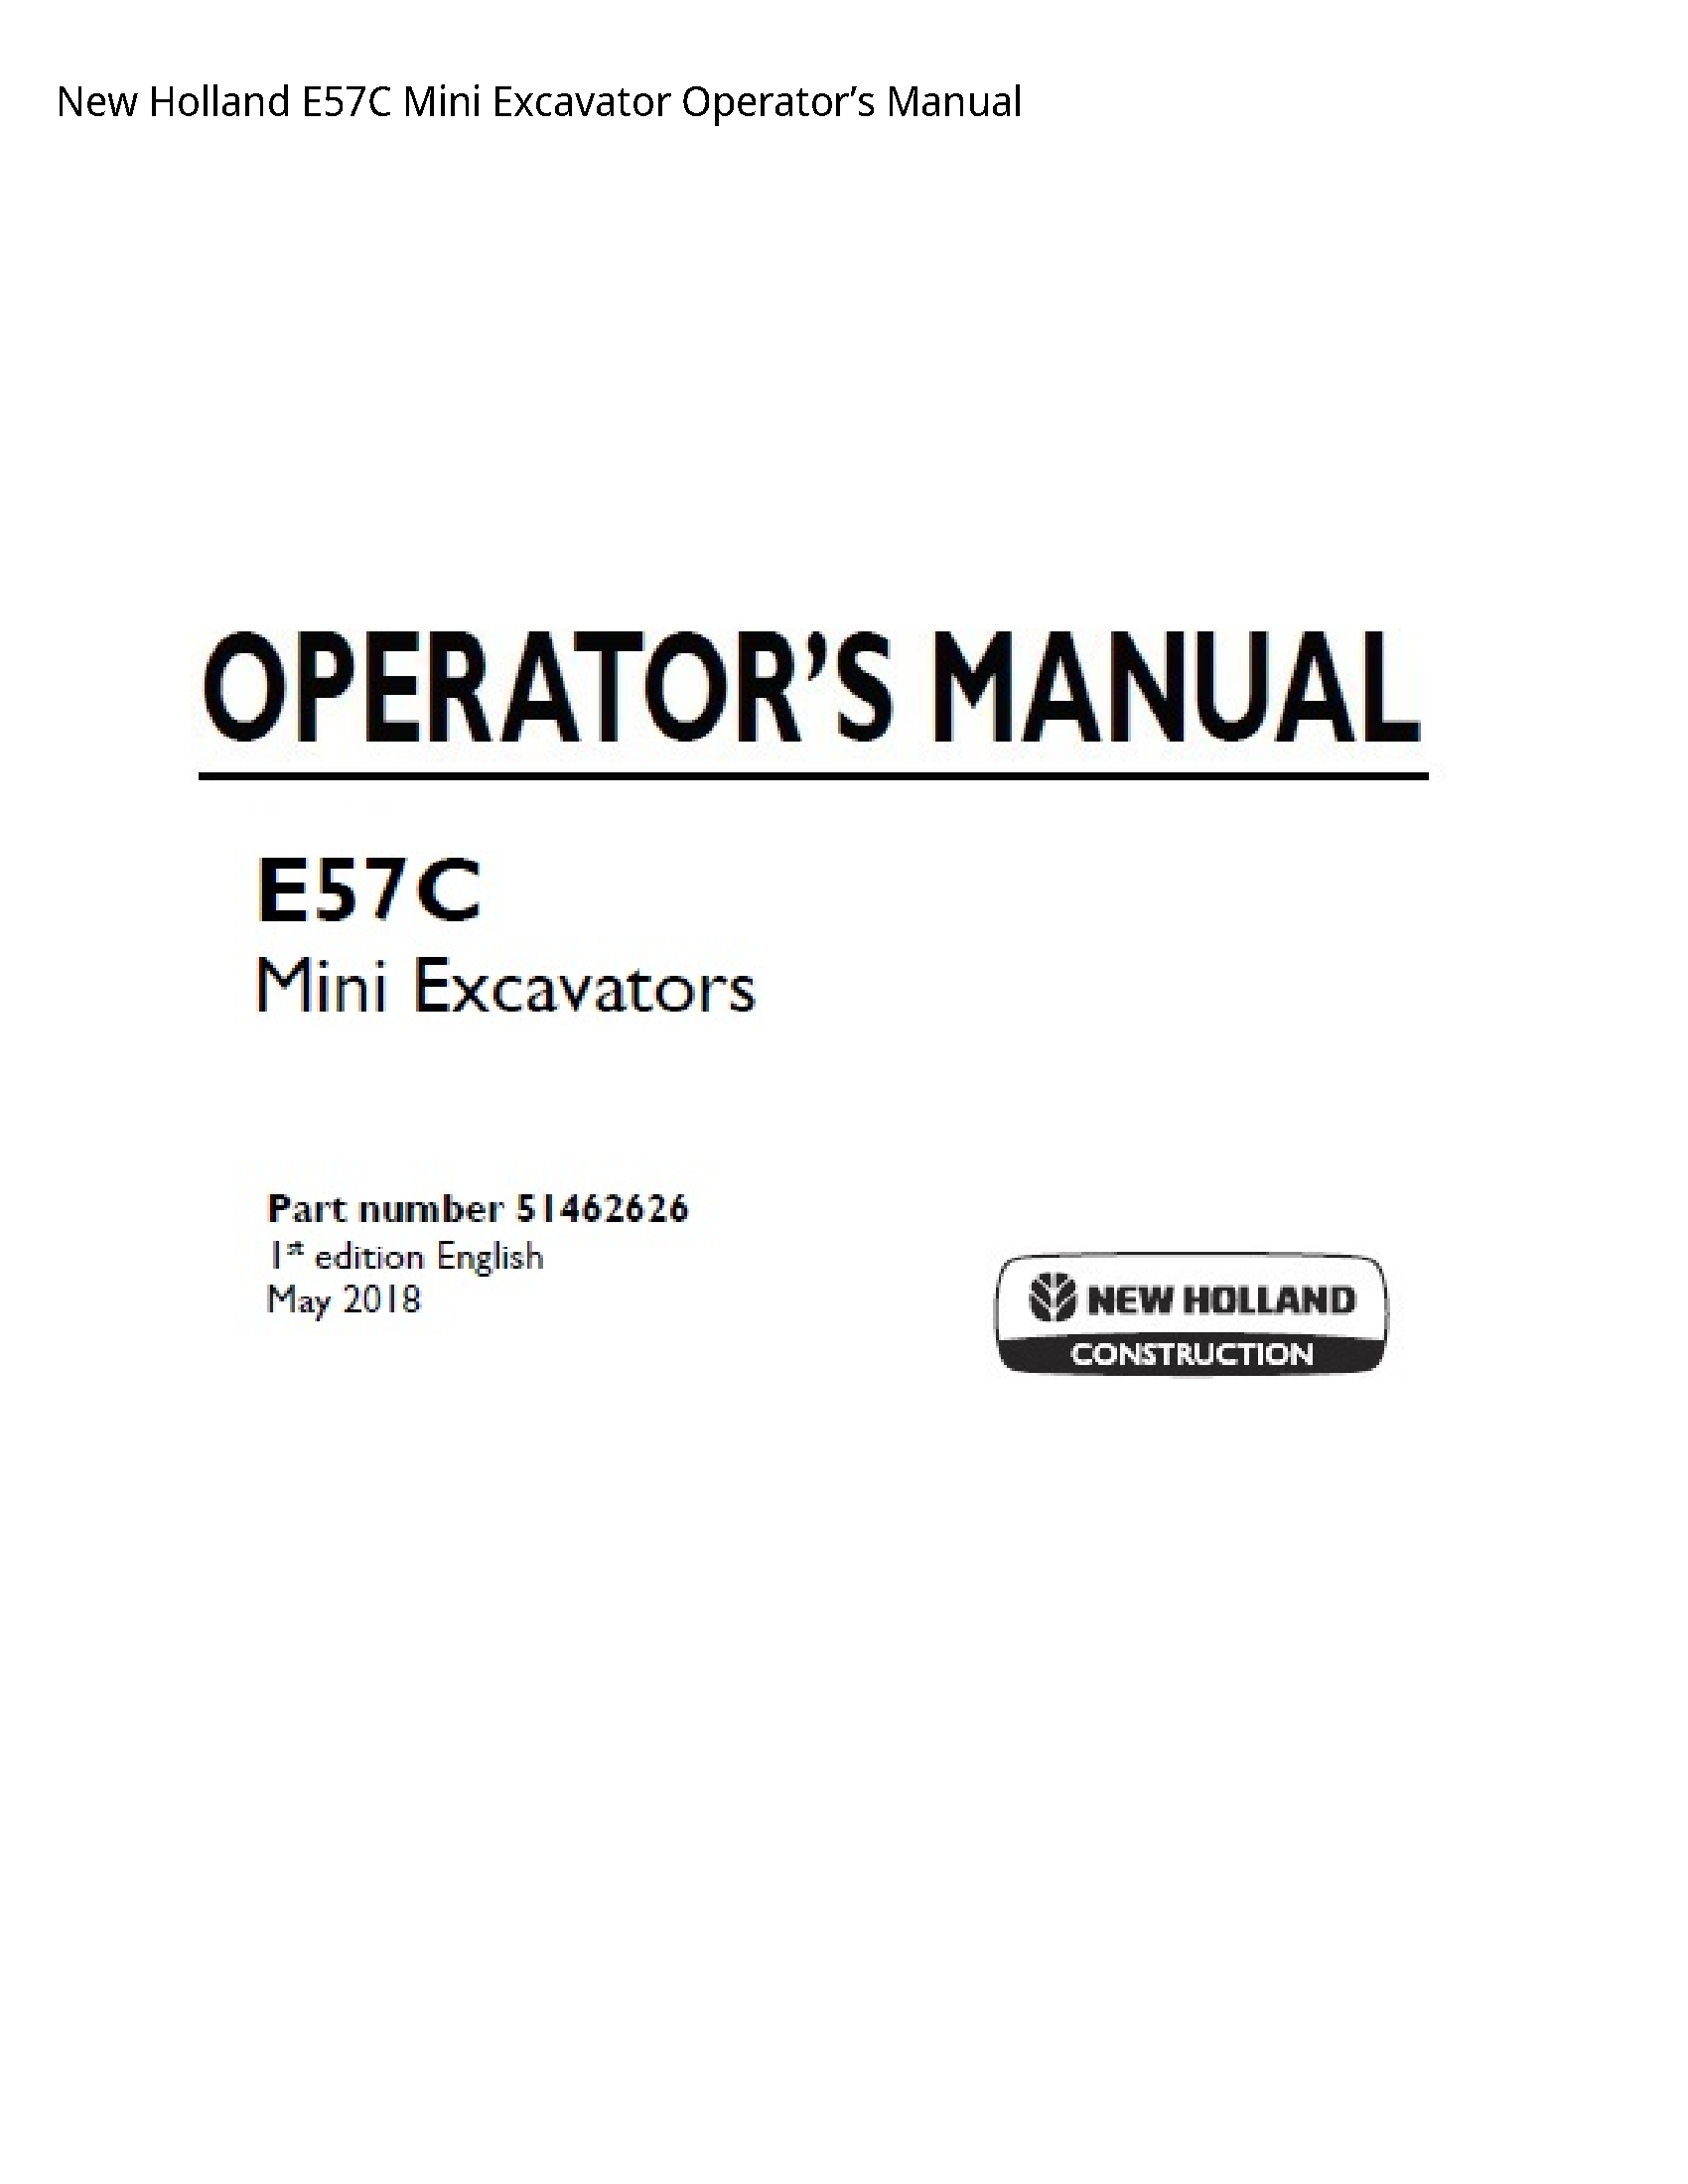 New Holland E57C Mini Excavator Operator’s manual